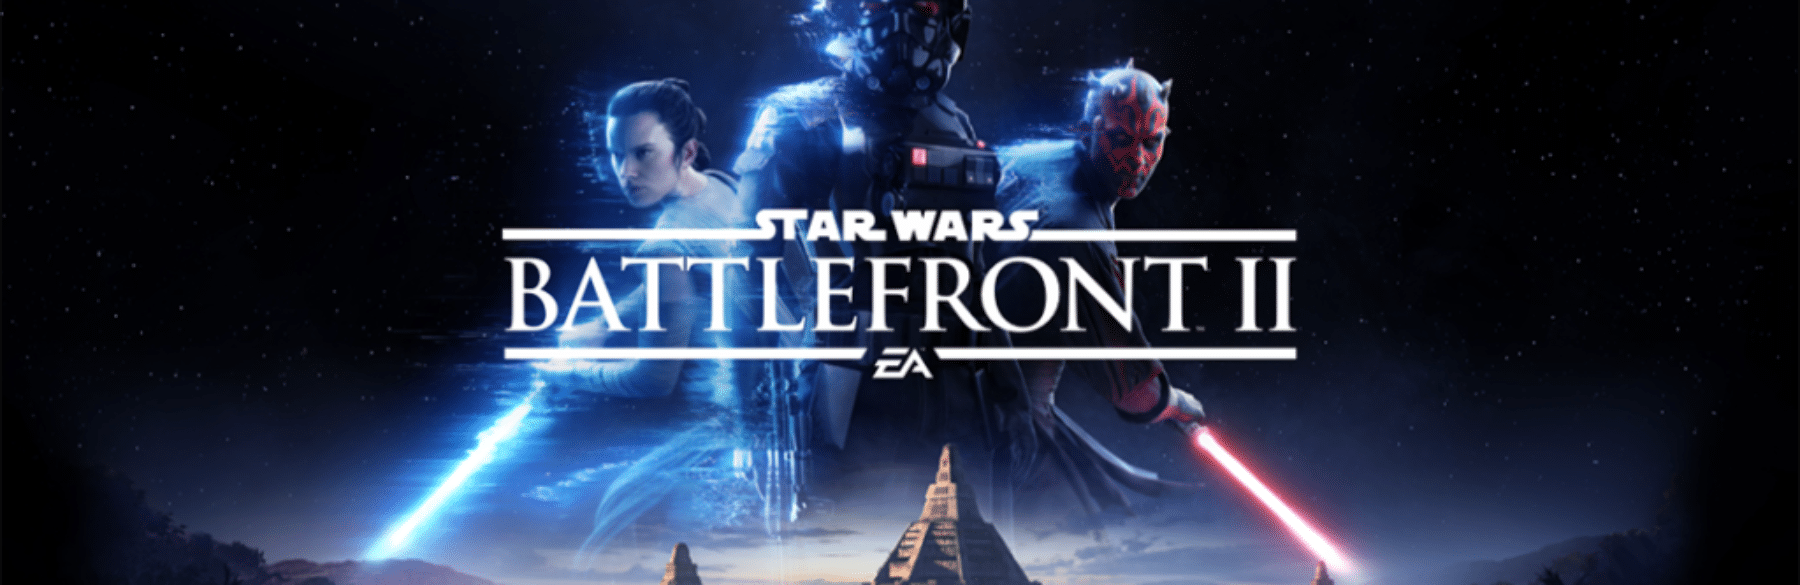 Star Wars Battlefront 2 2017 Free Download